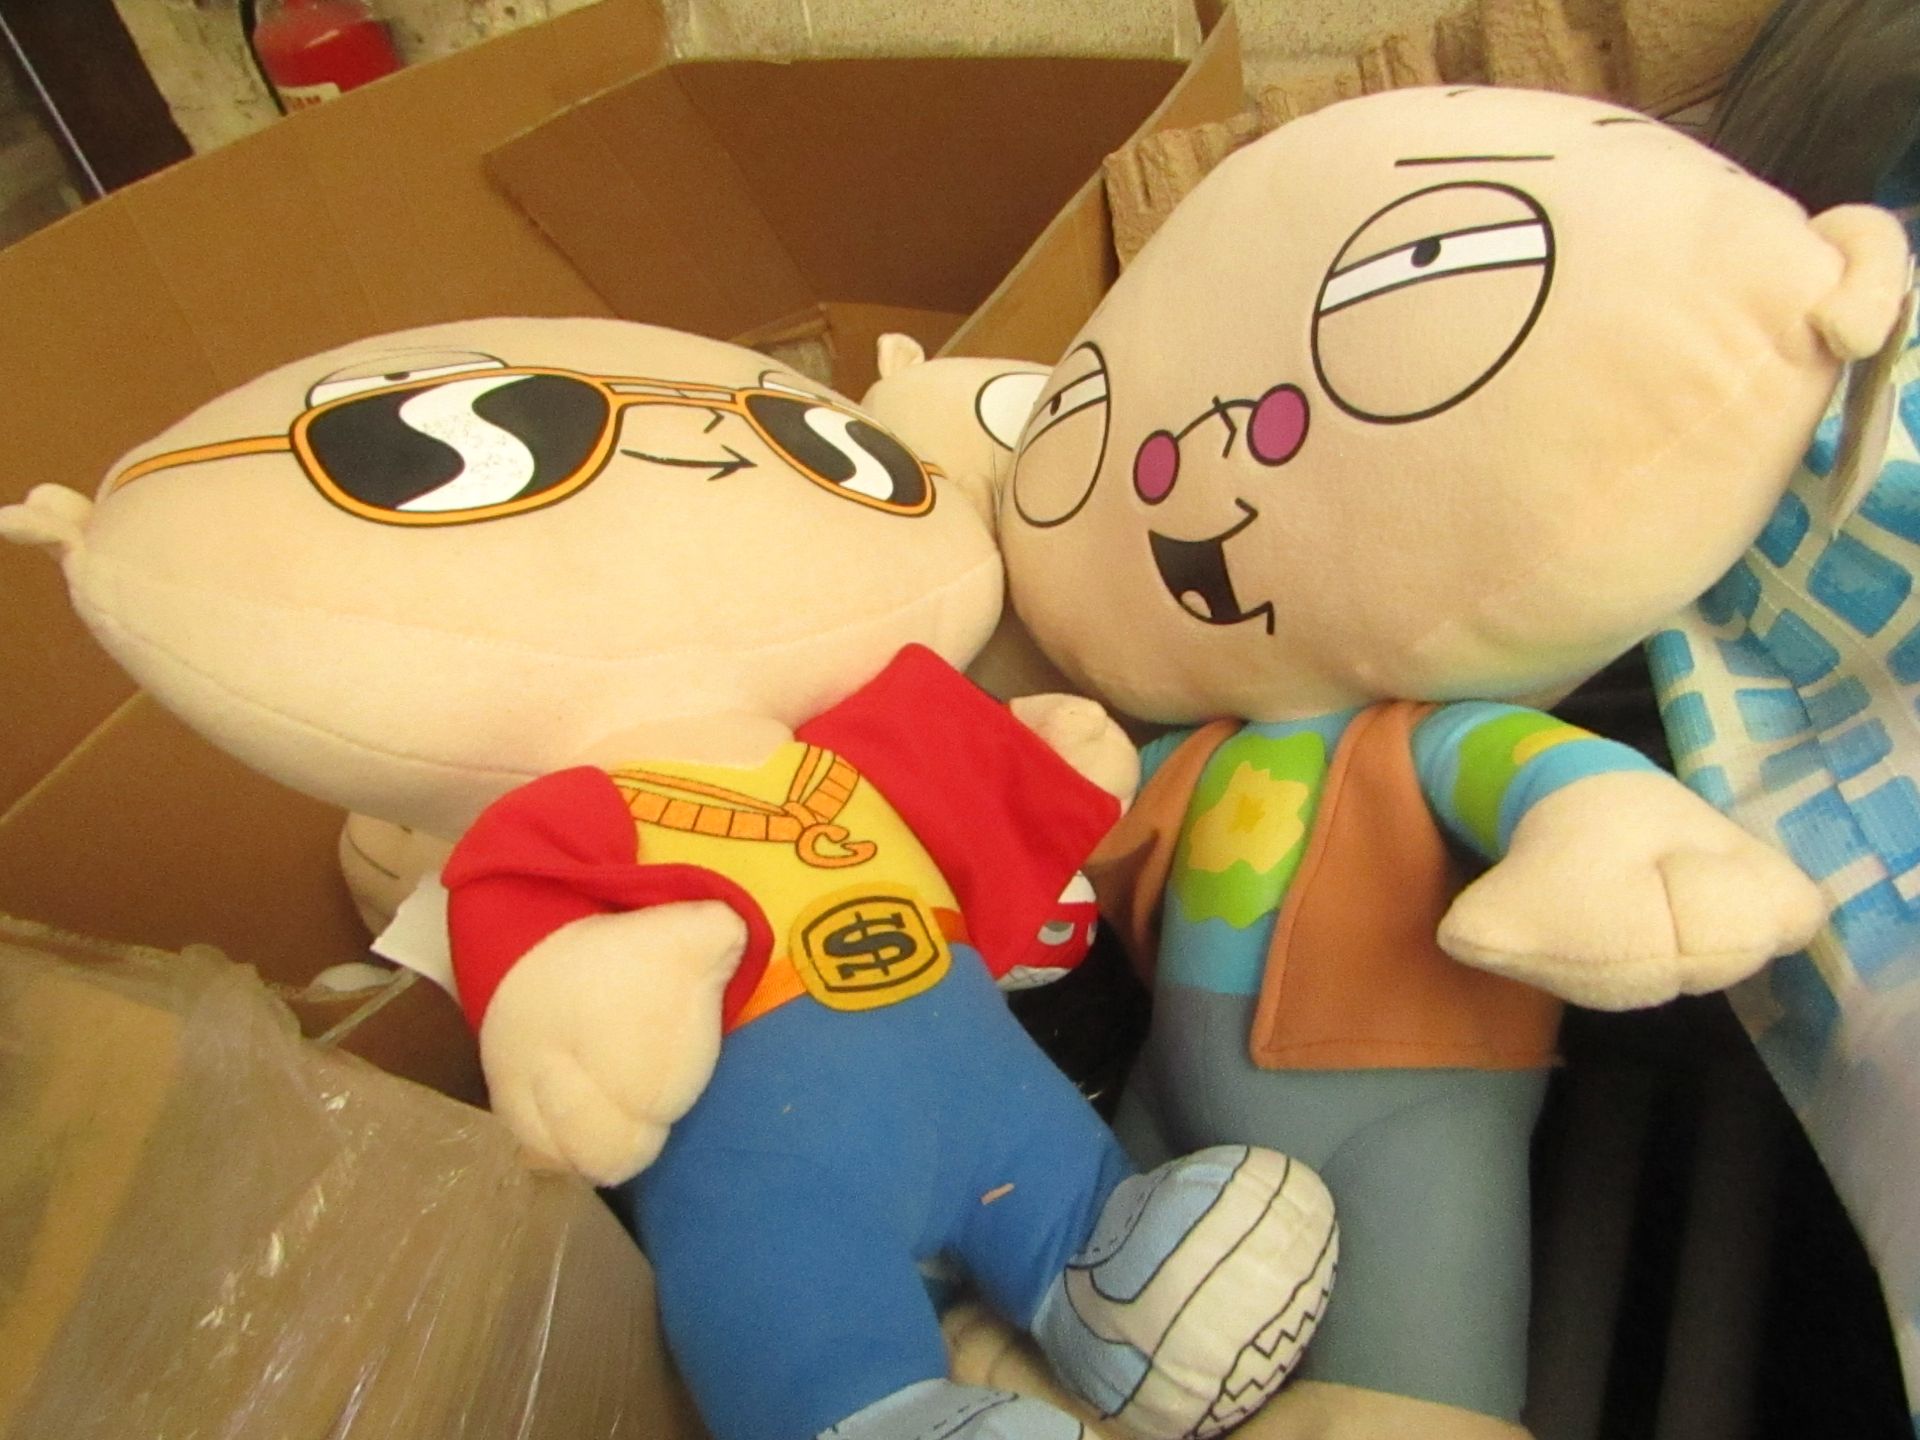 2 x Family Guy 'Stewie' Teddies. New with tags.